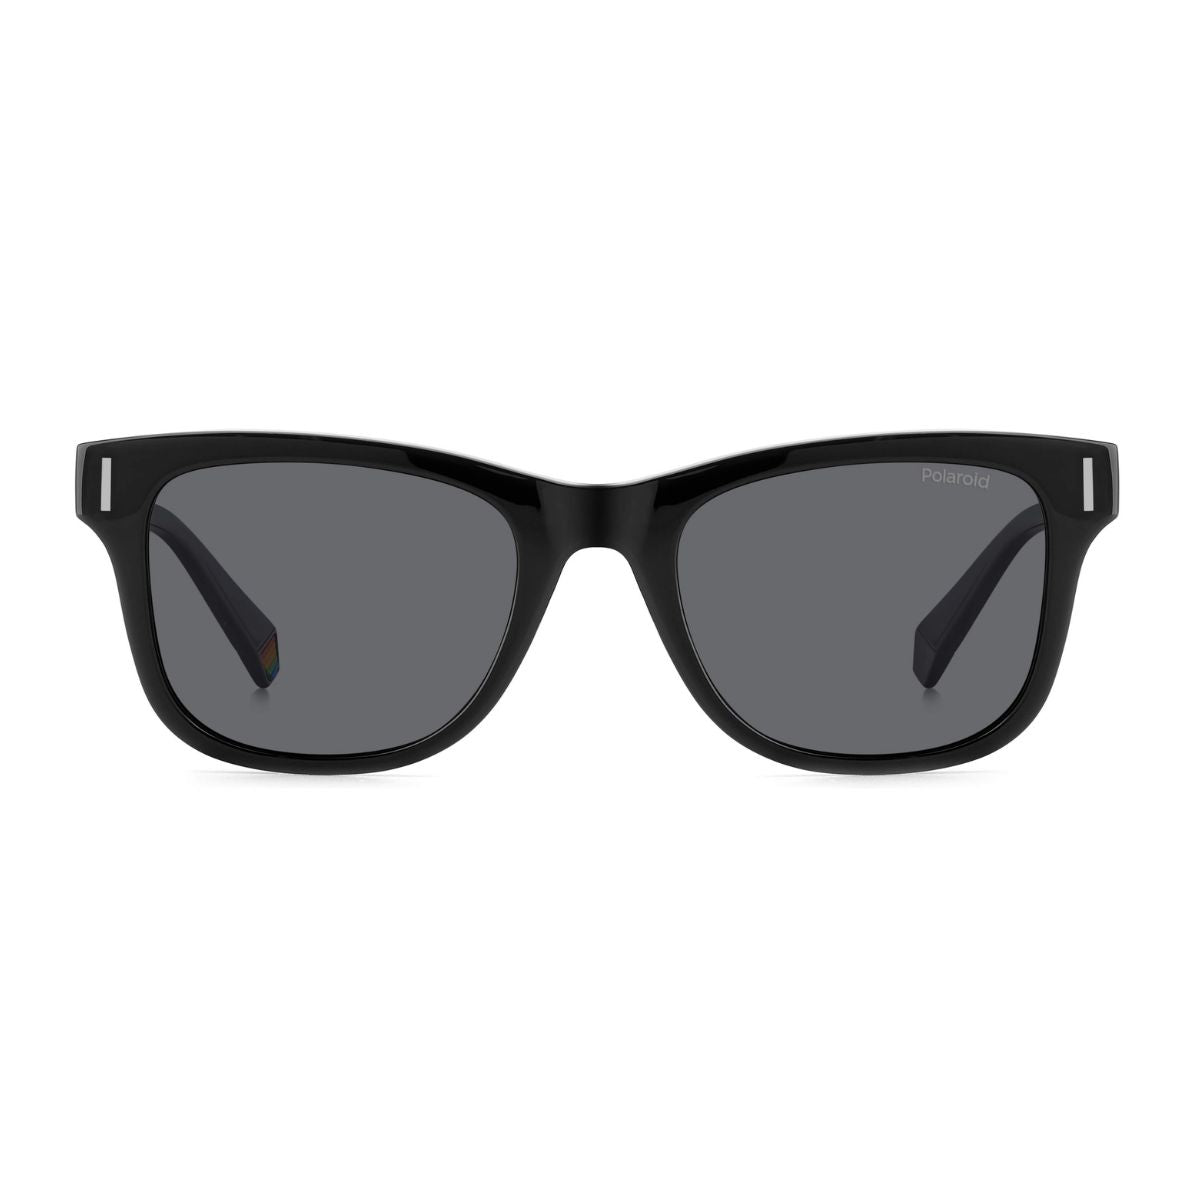 "Polaroid 6206/S 807M9 Polarized Sunglasses For Men and Women At Optorium"